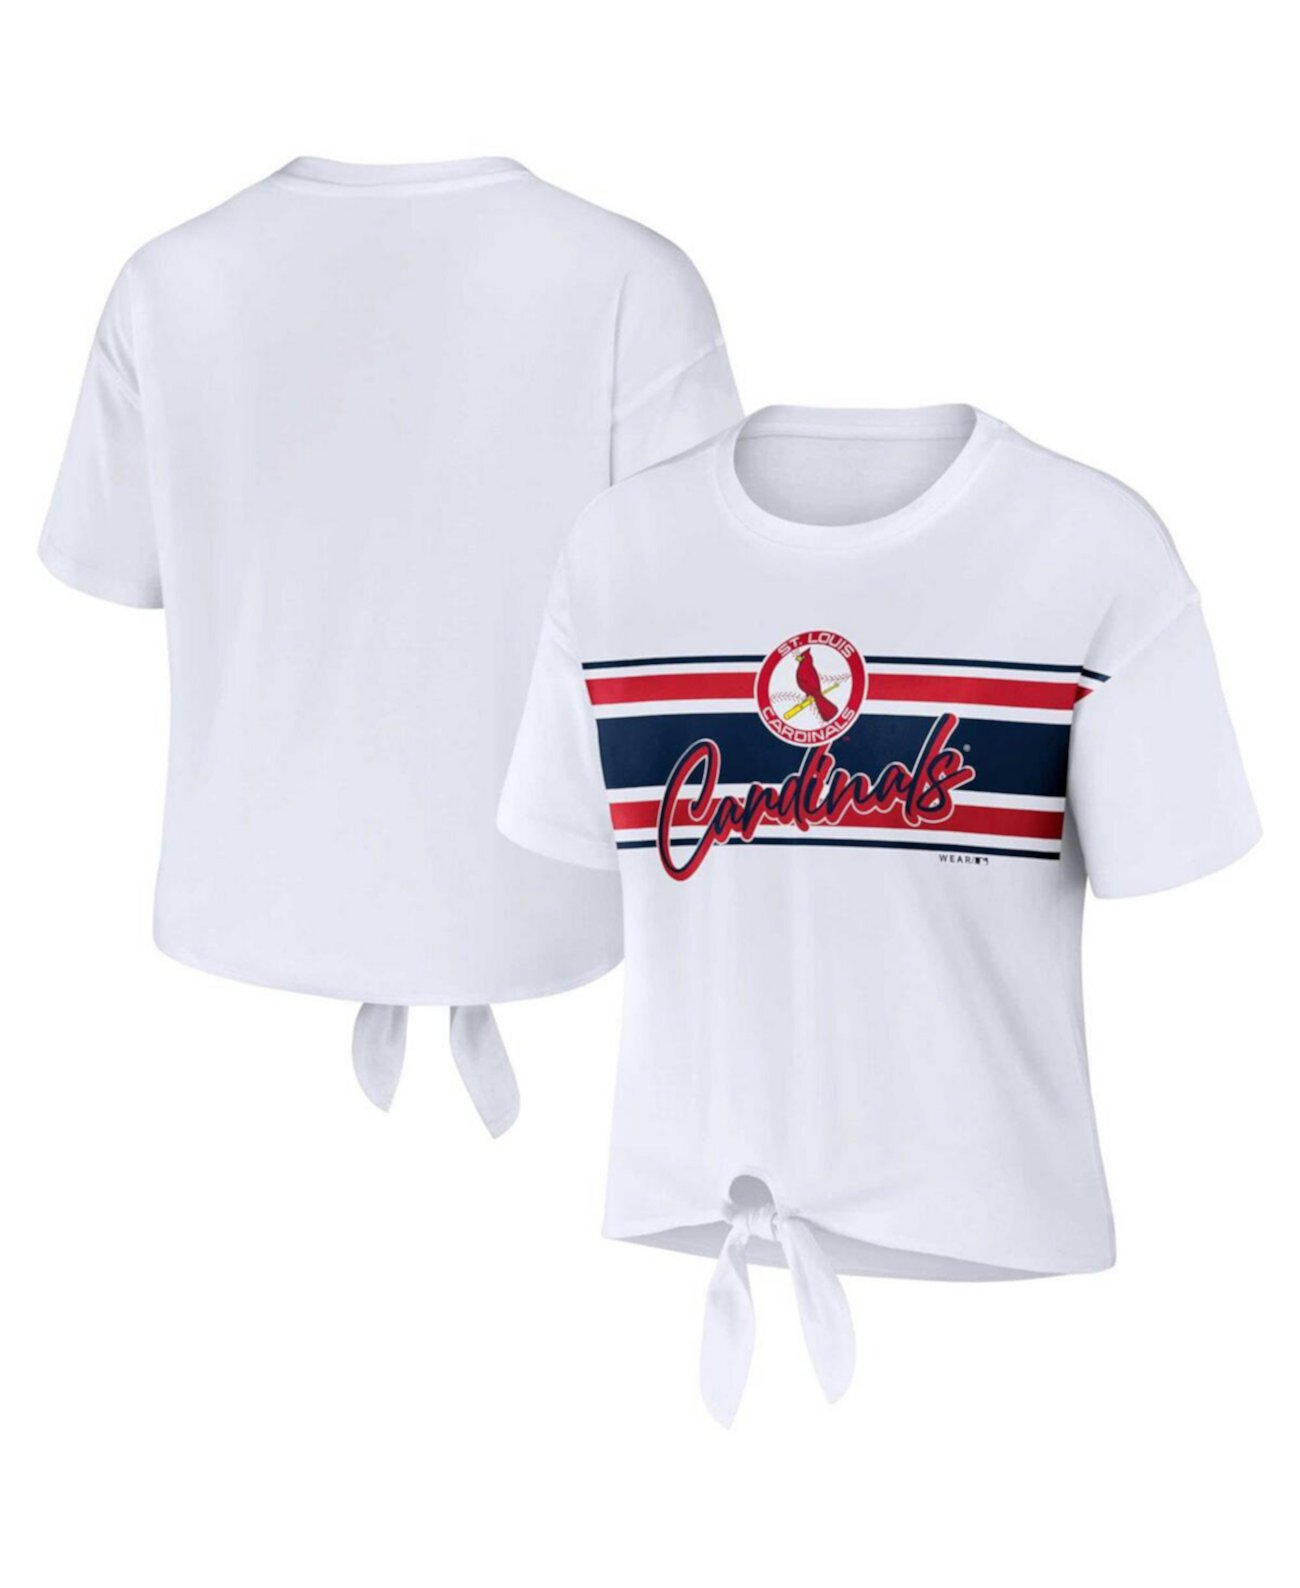 Женская белая футболка St. Louis Cardinals с завязкой спереди WEAR by Erin Andrews